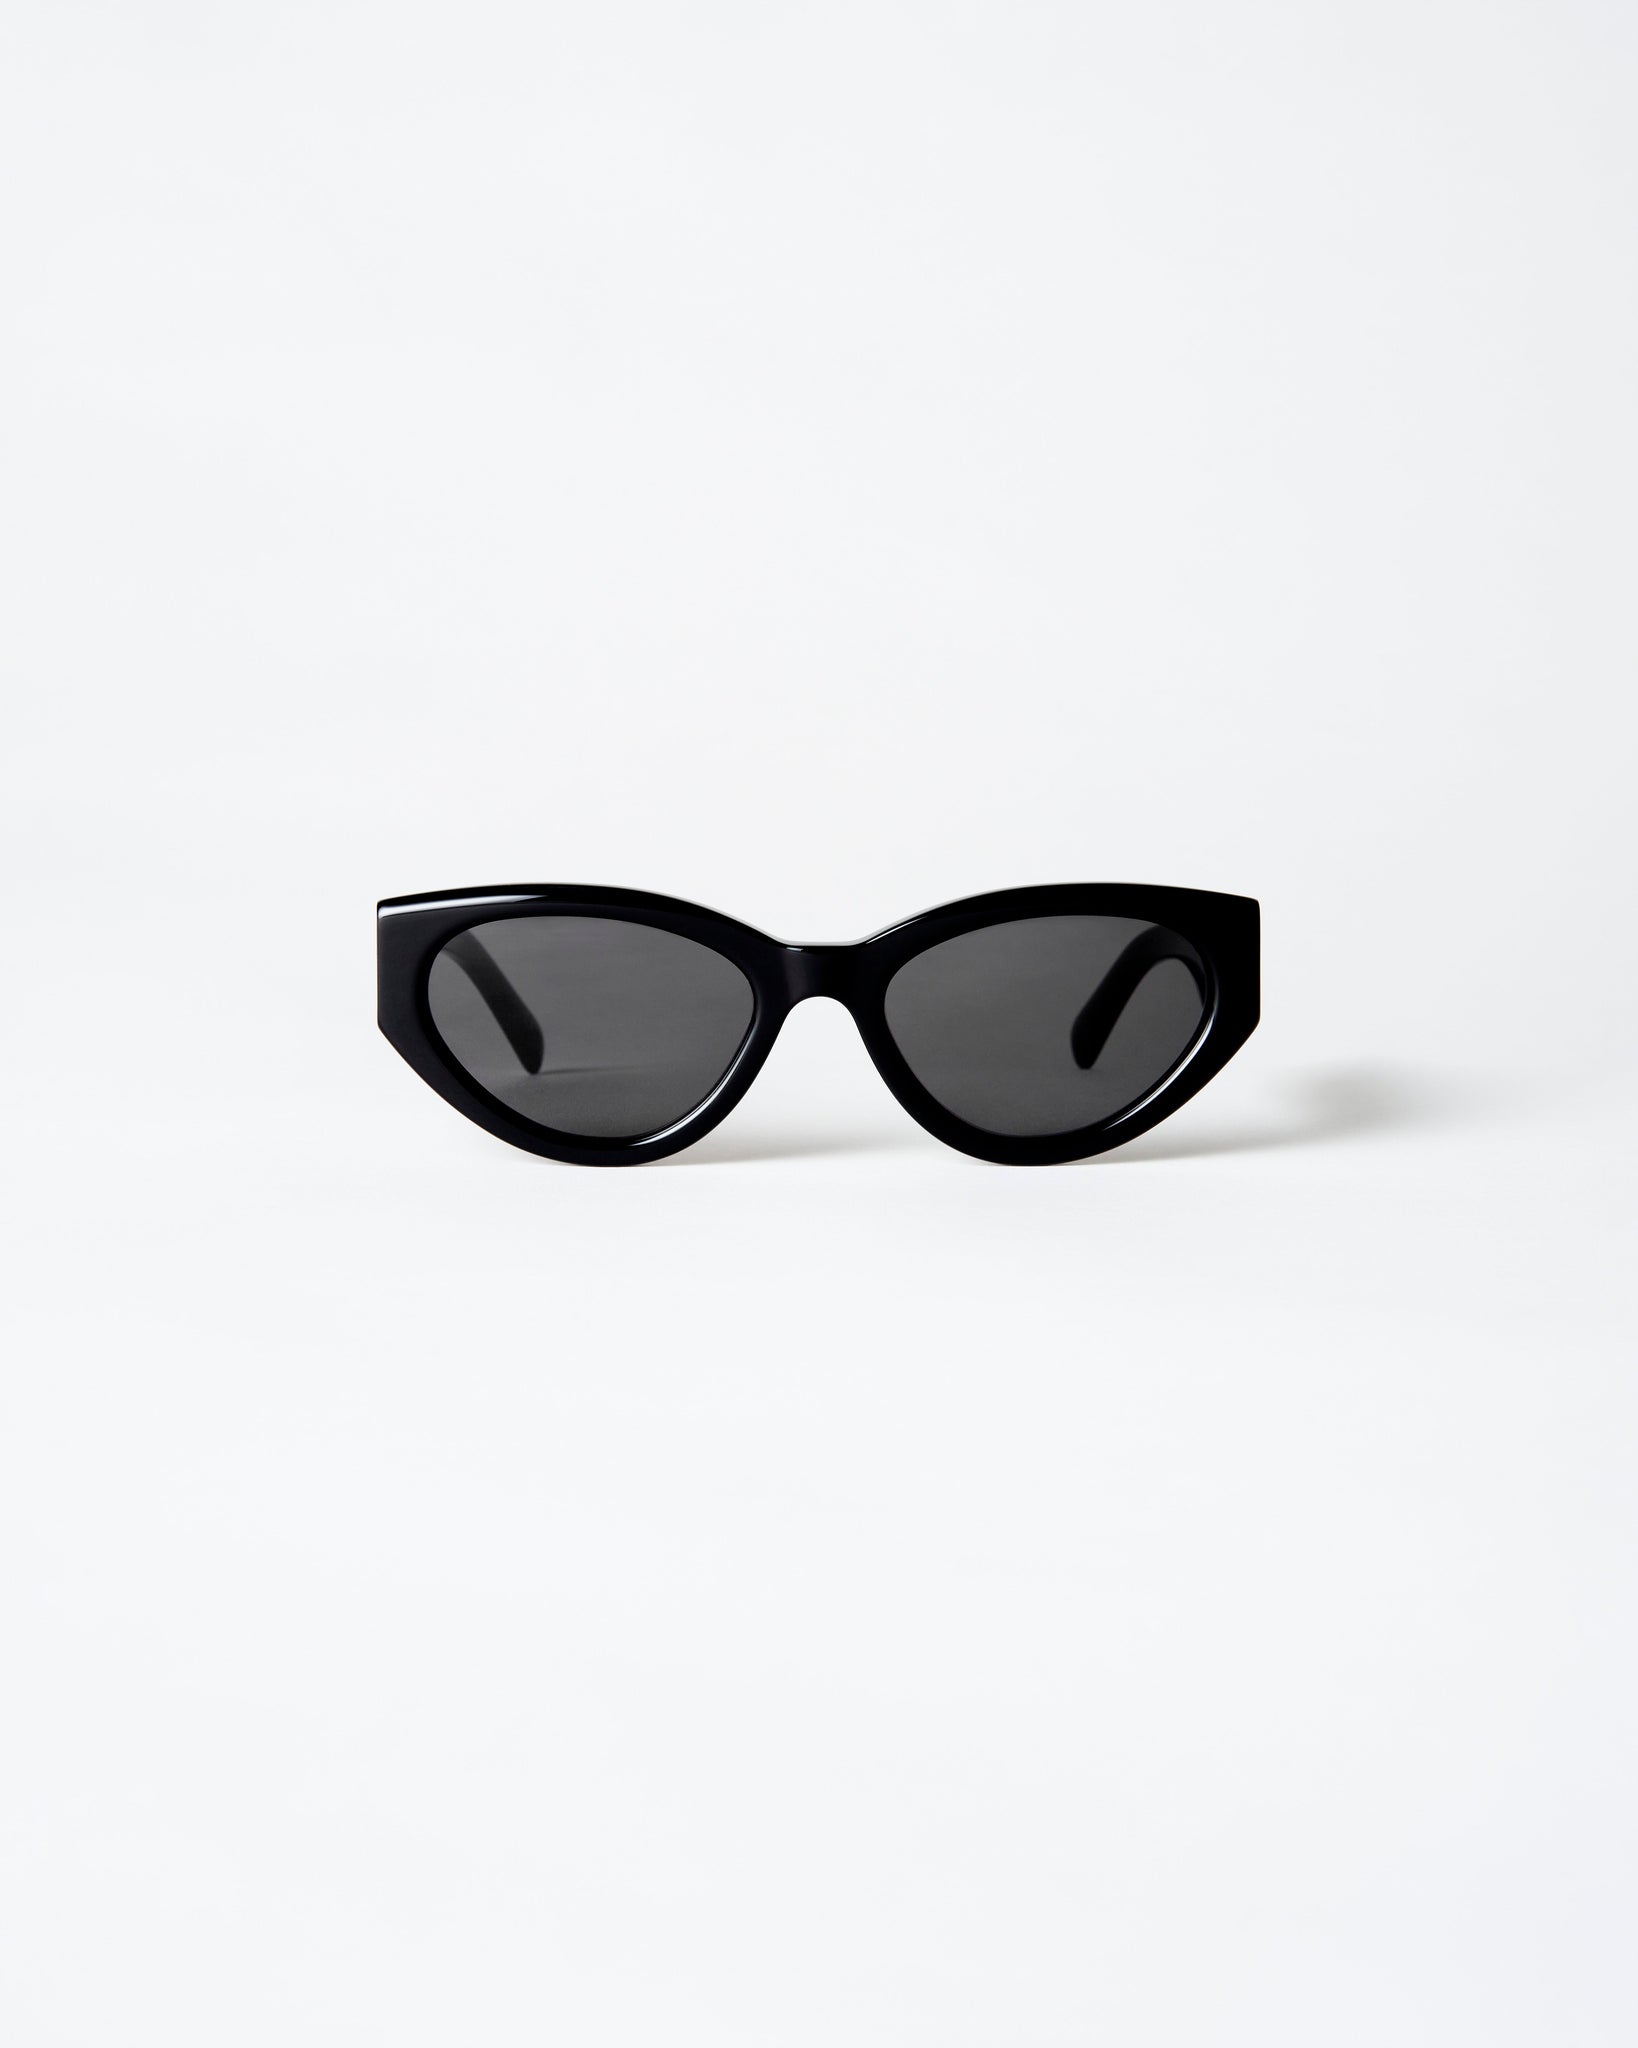 Chimi eyewear sunglasses 06